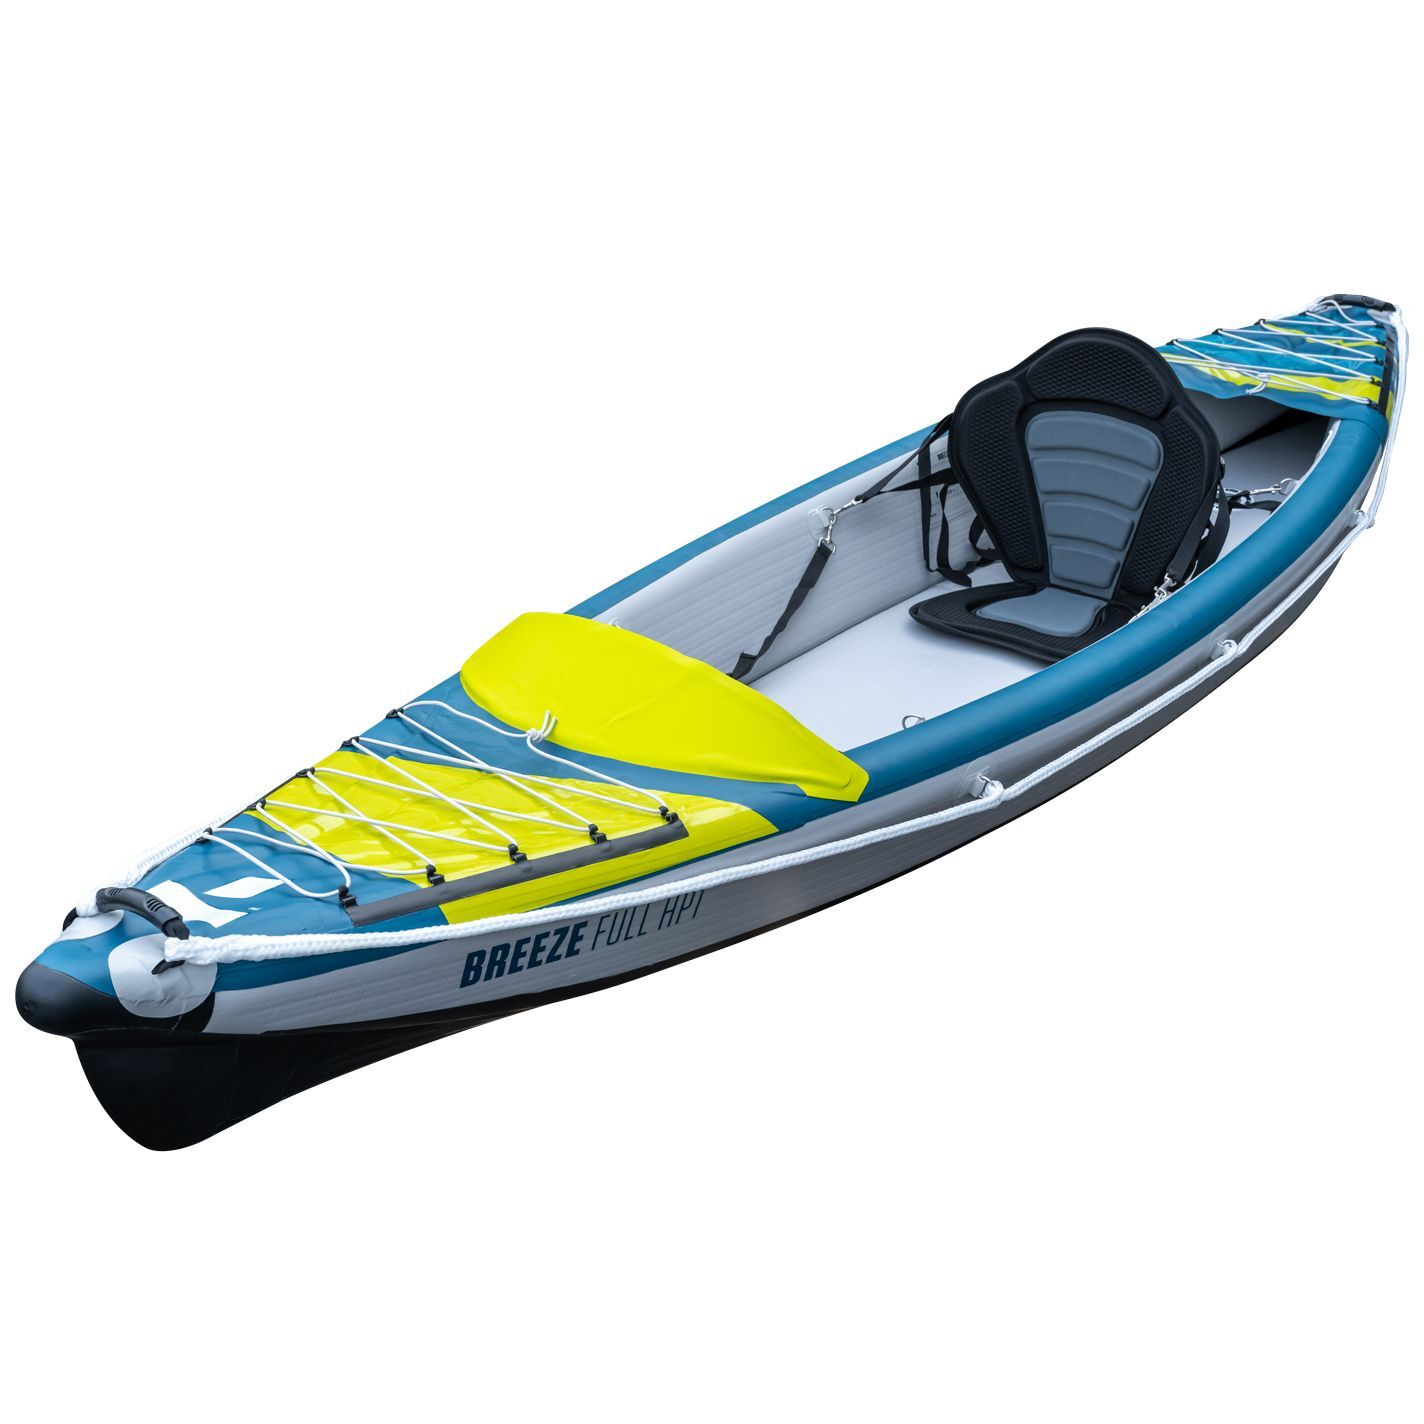 Tahe Outdoor Kayak Air Breeze Full Hp1 - aufblasbares Kajak